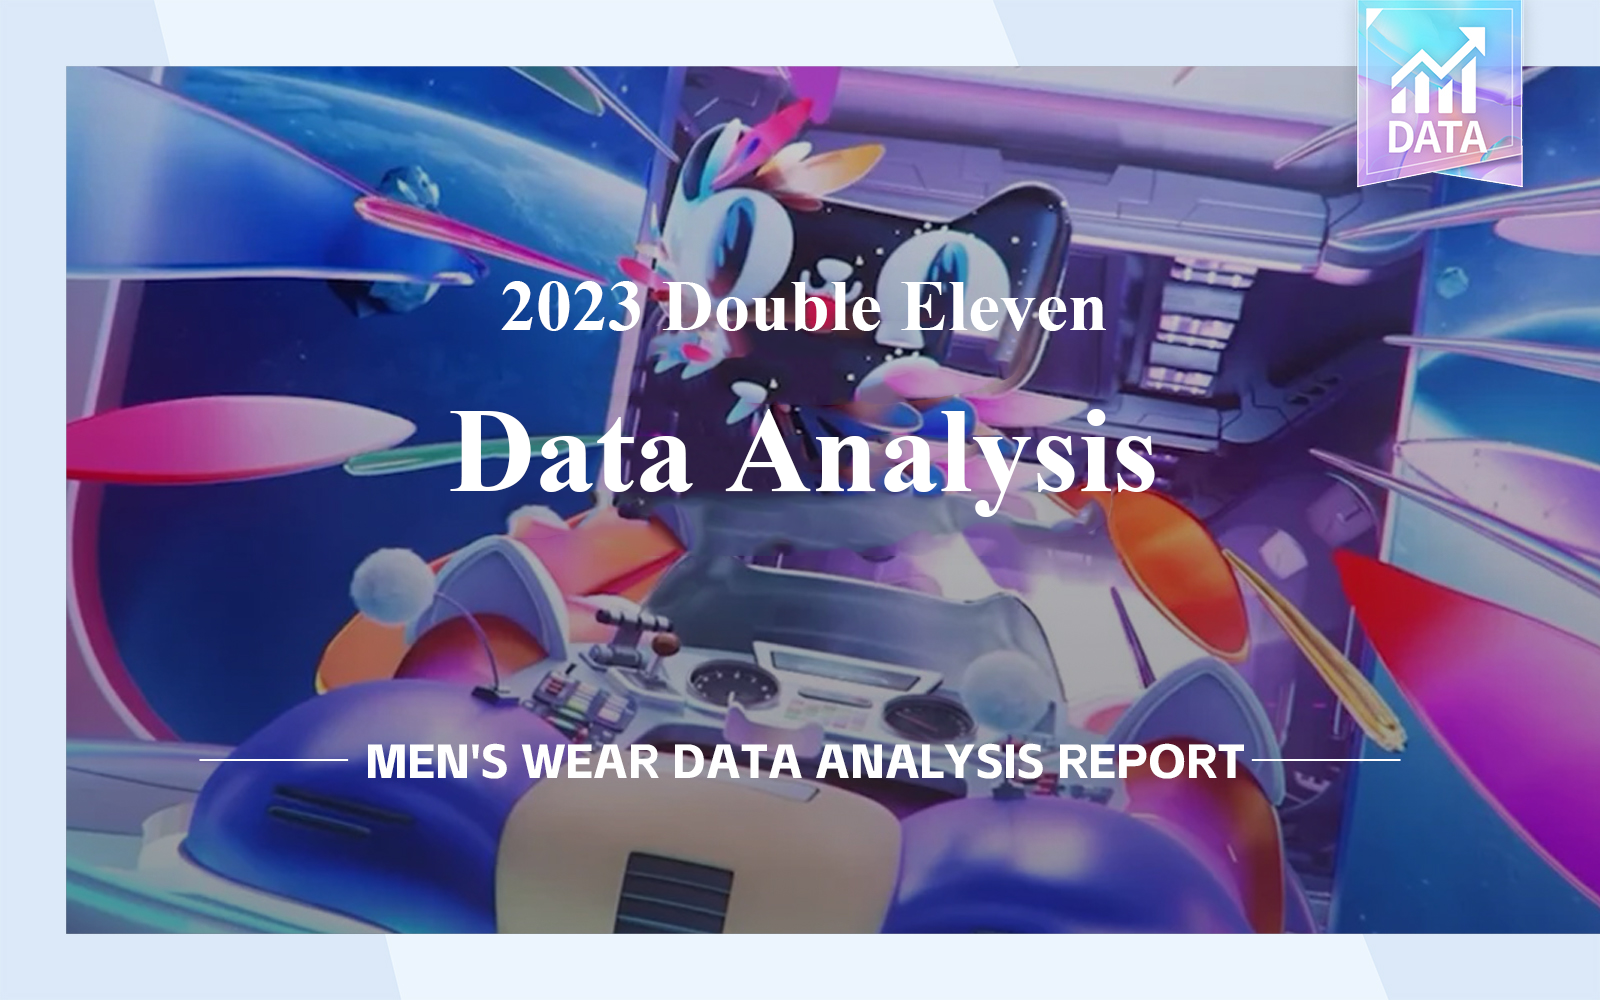 2023 Double Eleven Data Analysis of Menswear